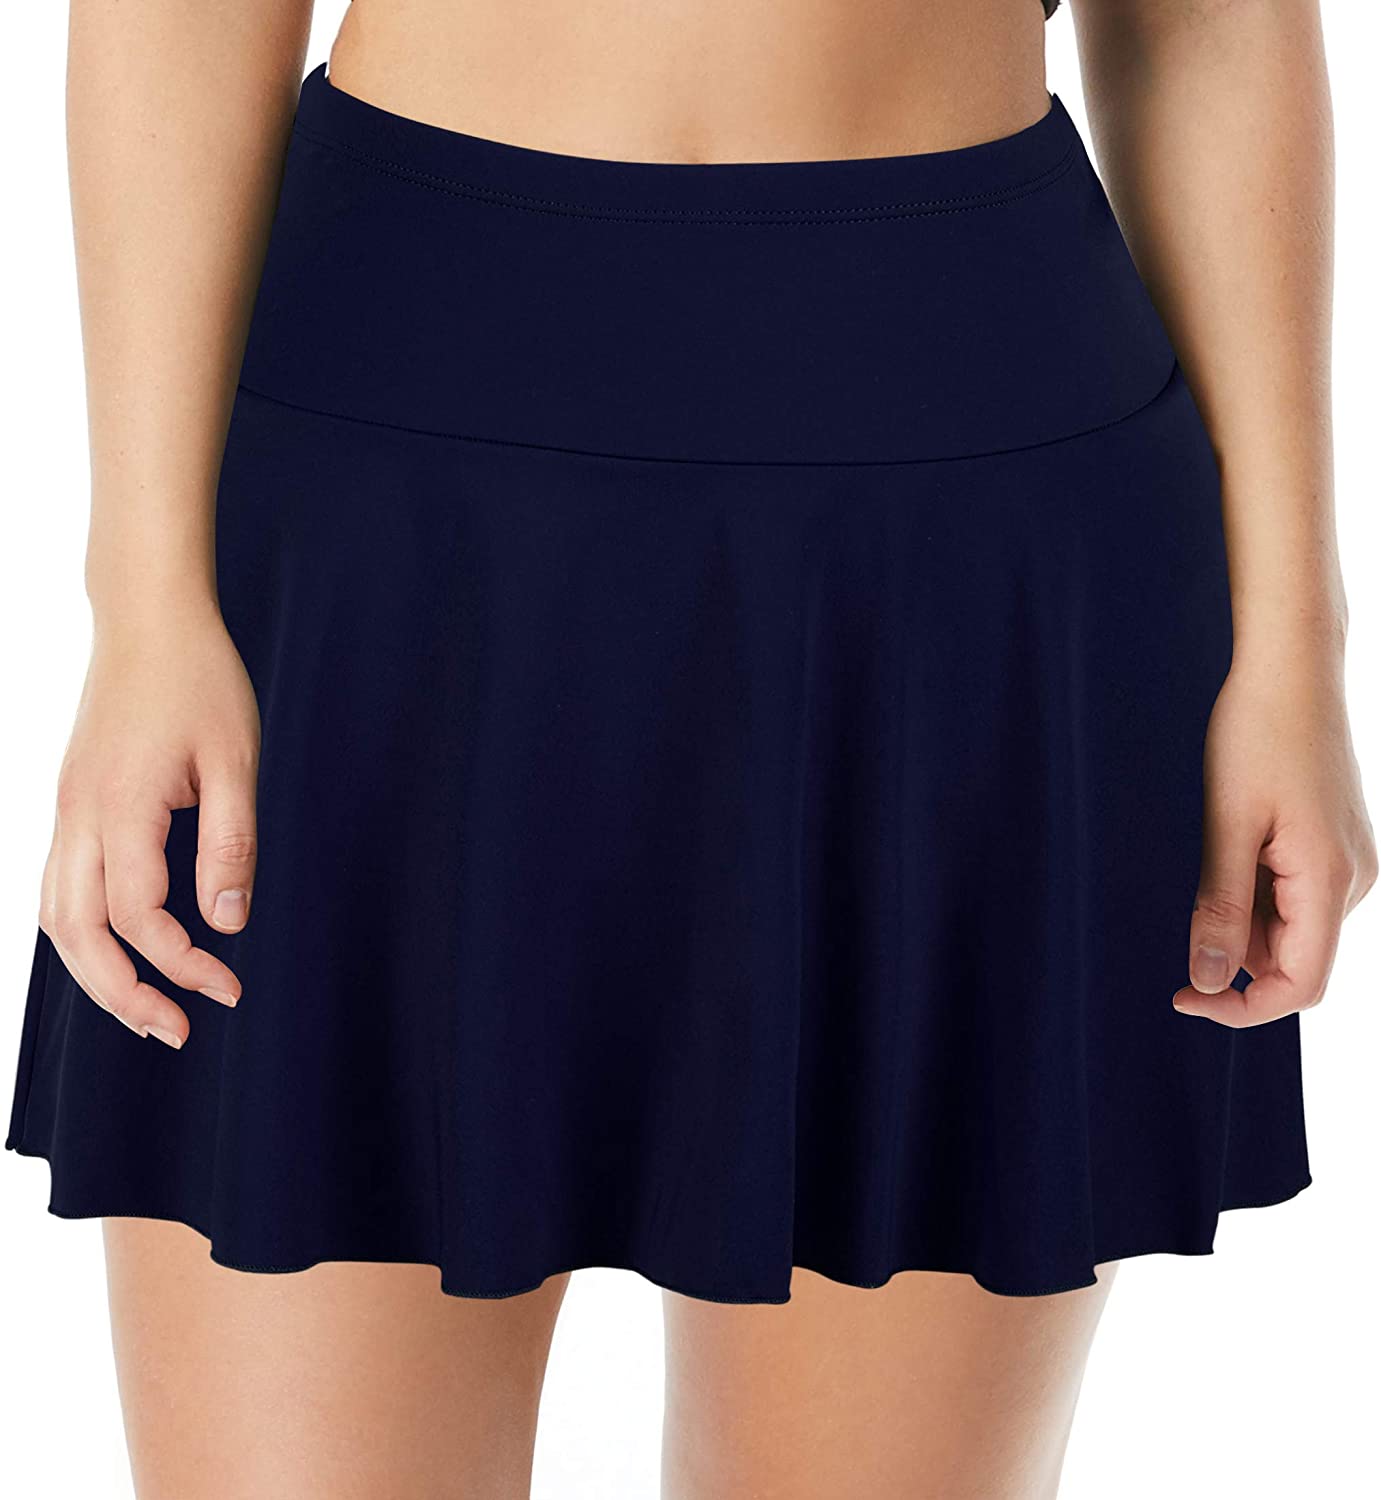 Septangle Women's High Waist Swim Skirt Tummy Control, Navy Blue, Size 22 Plus C | eBay